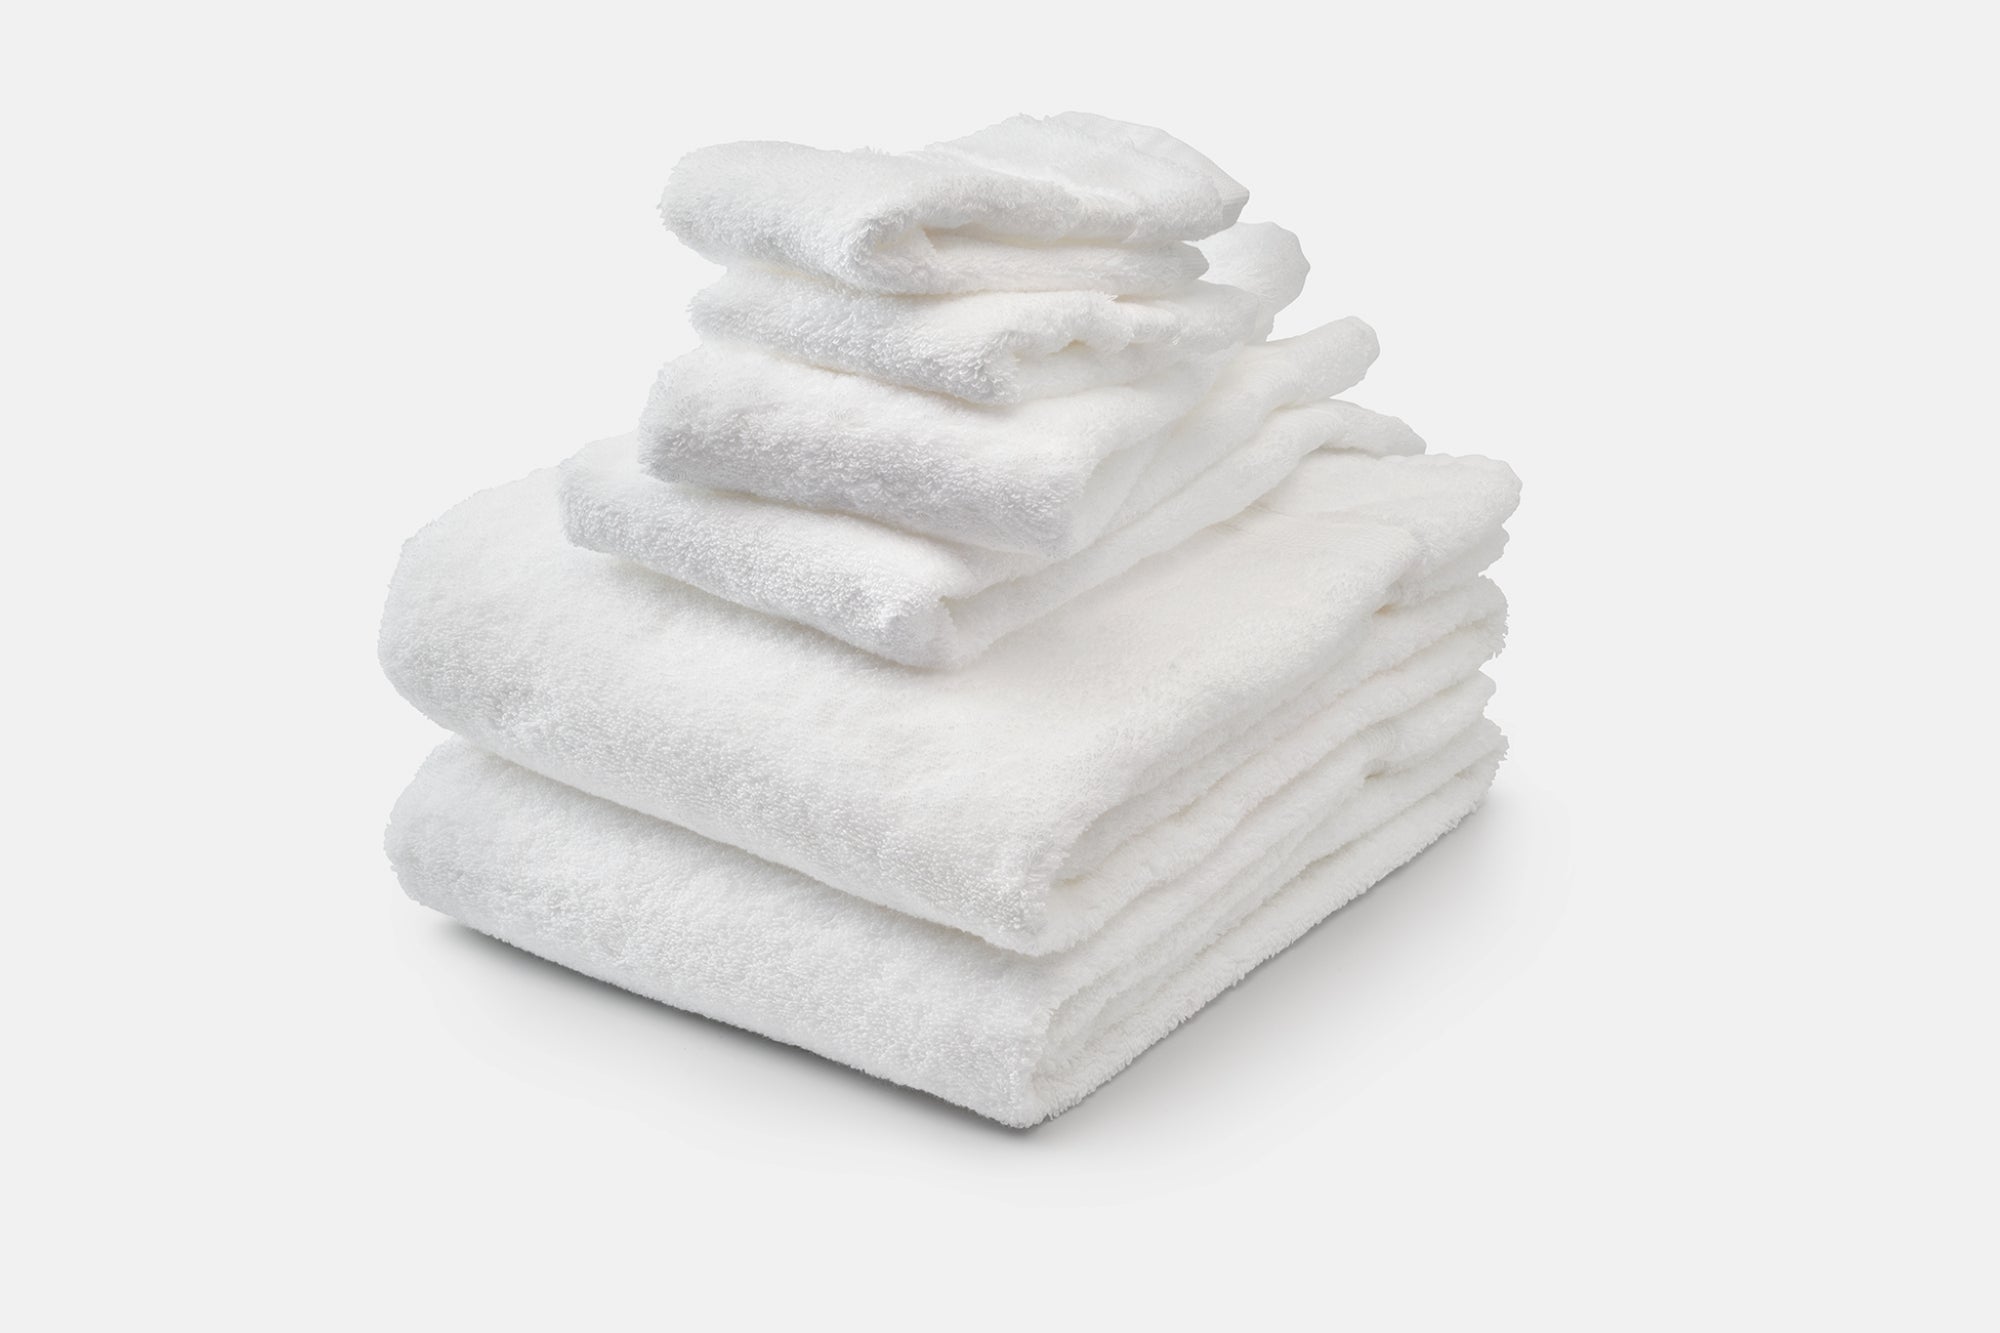 Should I buy towel sets or individual towels?